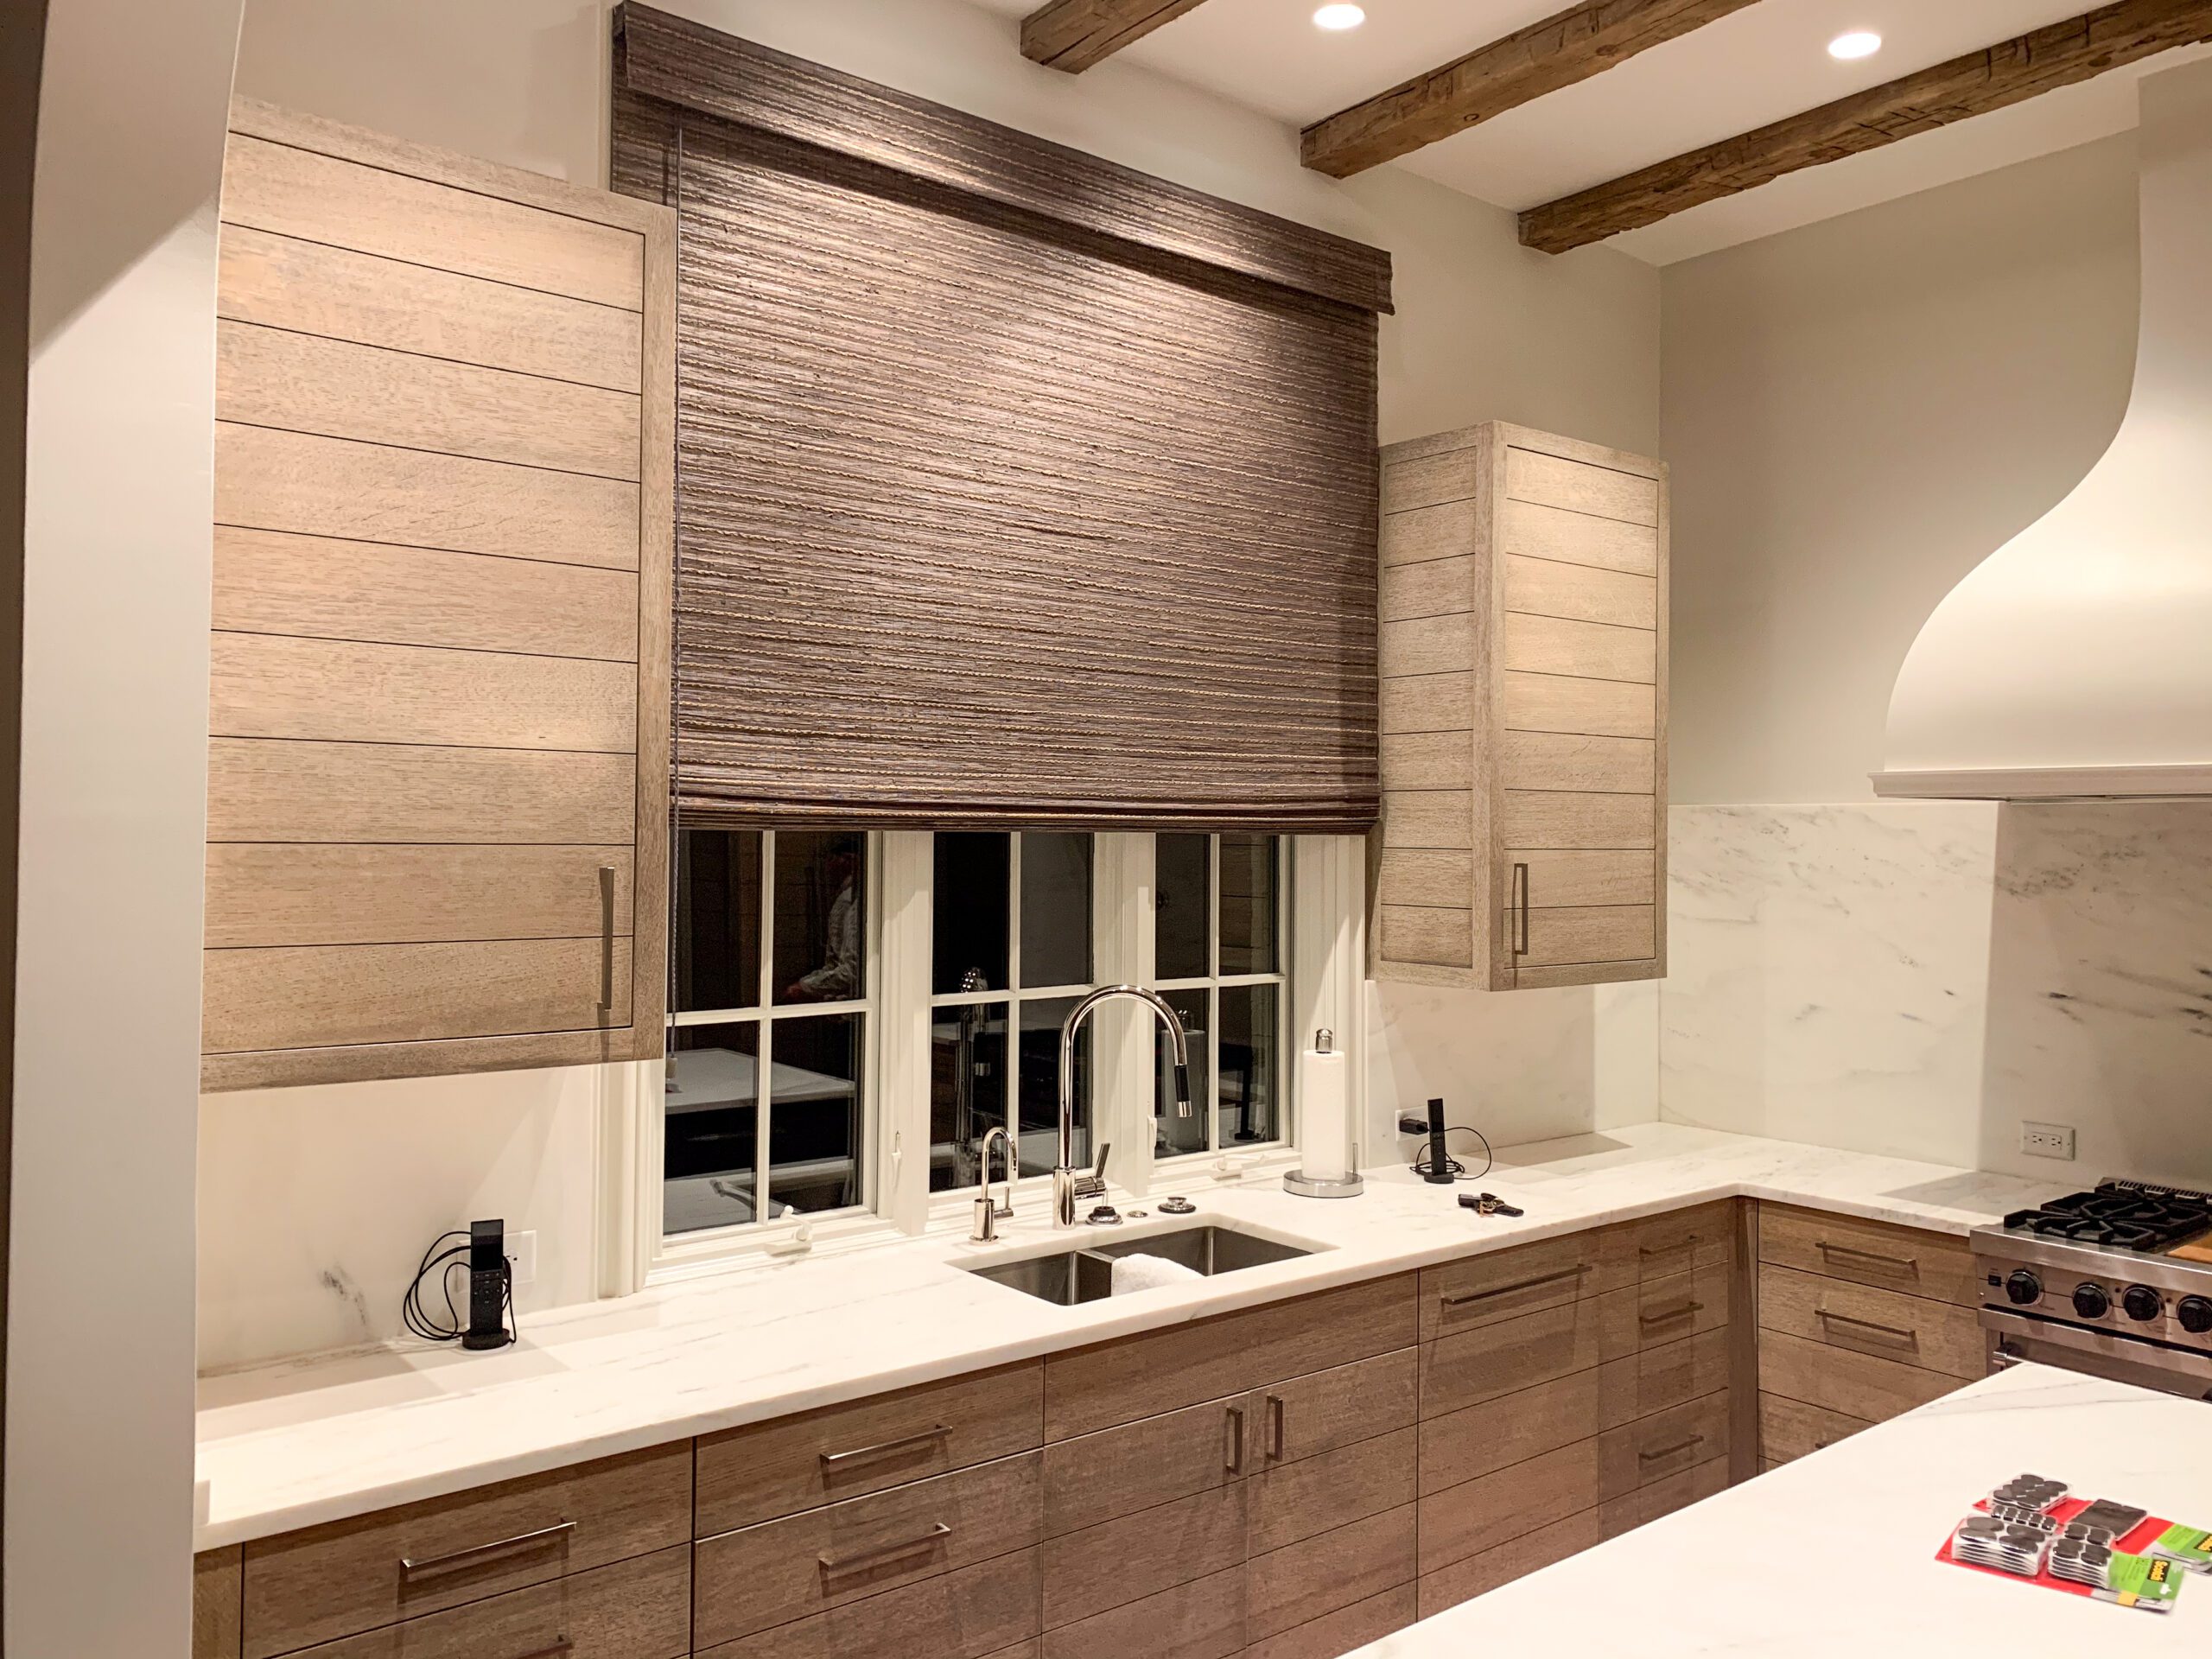 horizontal striped white oak cabinetry in custom kitchen by mdm design studio